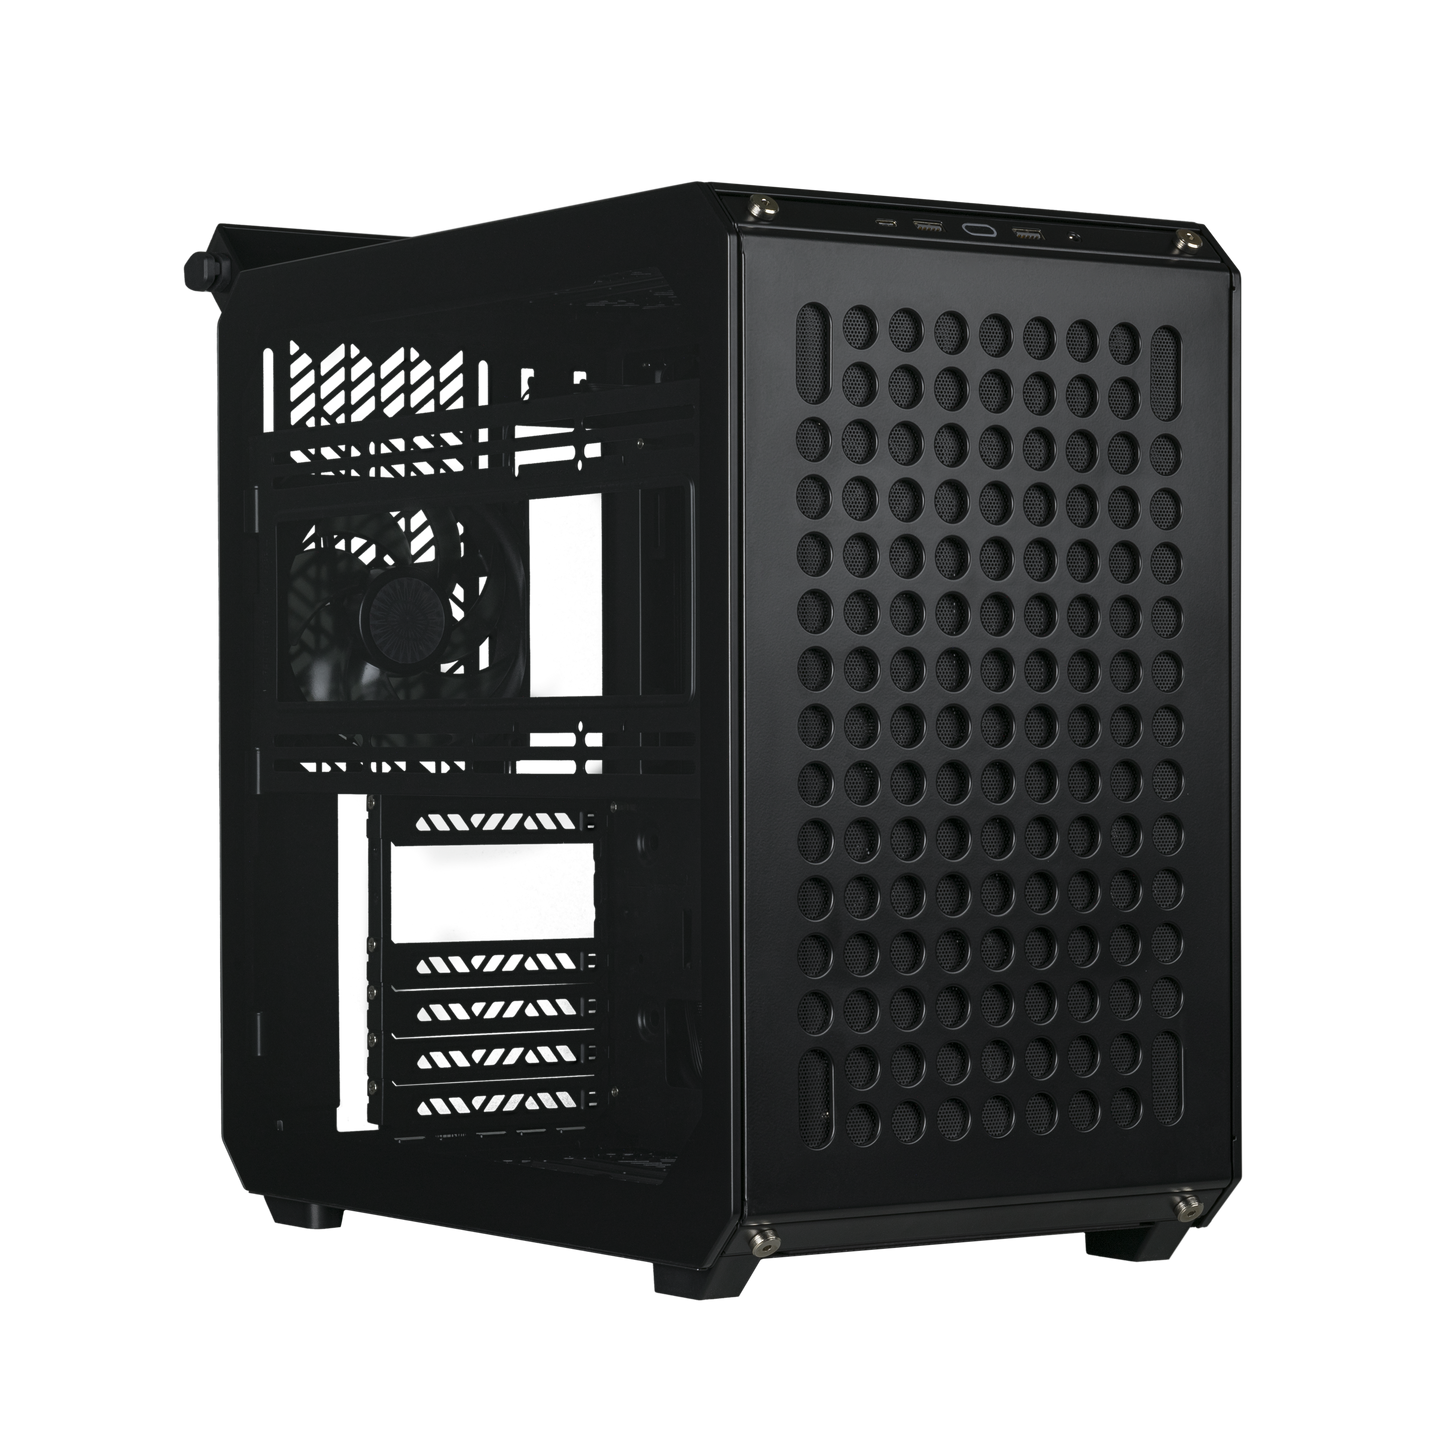 Cooler Master Qube 500 Flatpack - Mid Tower PC Case - Black